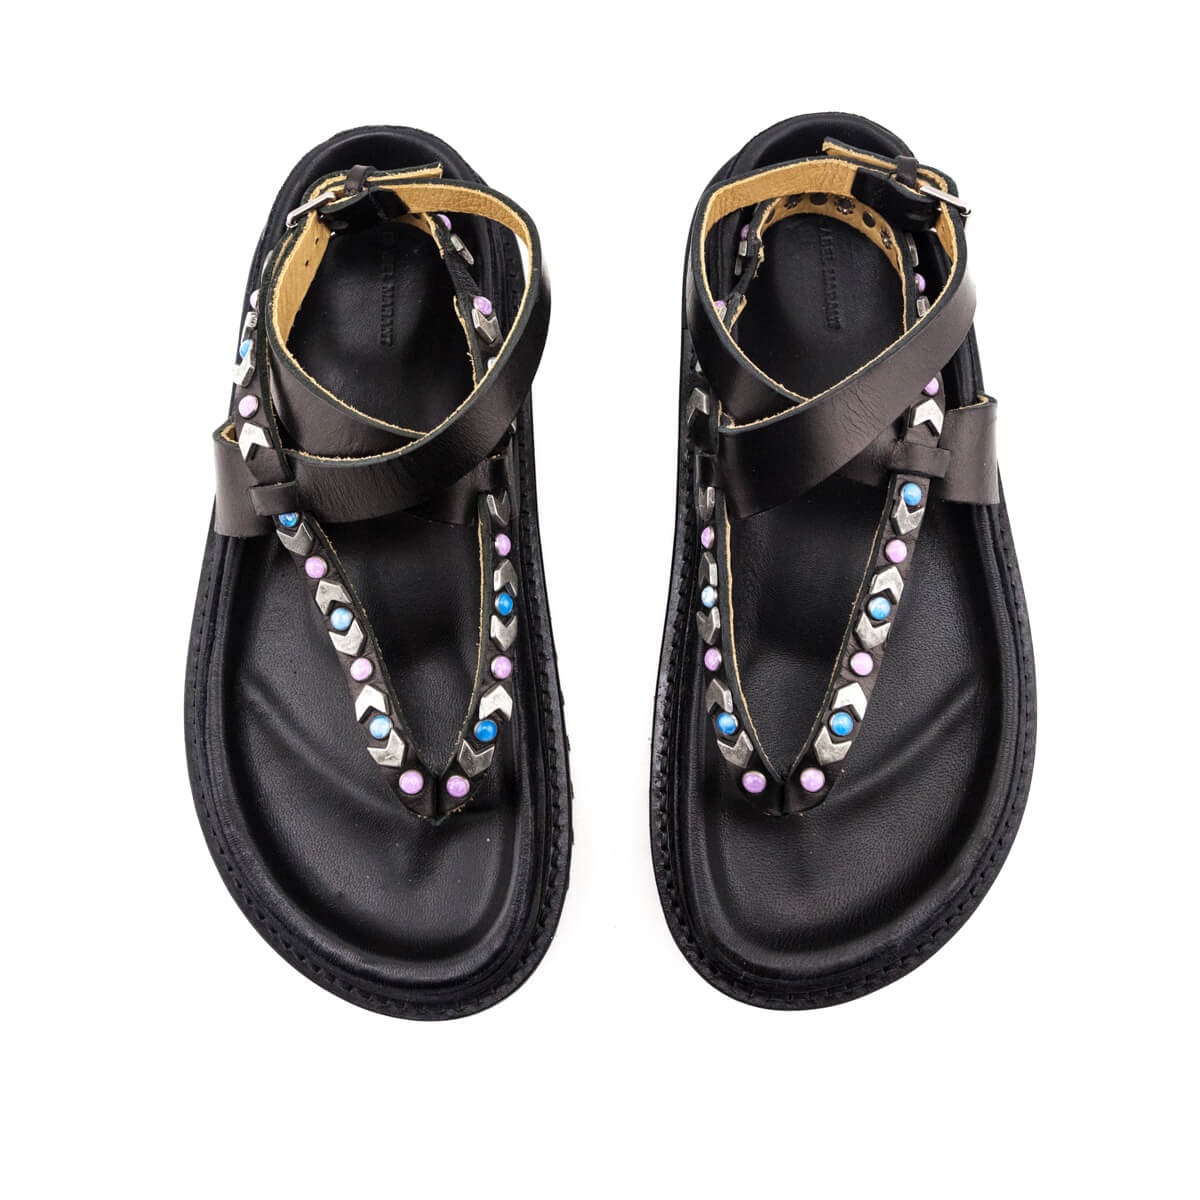 Isabel Marant Black Leather Studded T-Strap Platform Sandals Size US 5 | EU 35 - Love that Bag etc - Preowned Authentic Designer Handbags & Preloved Fashions